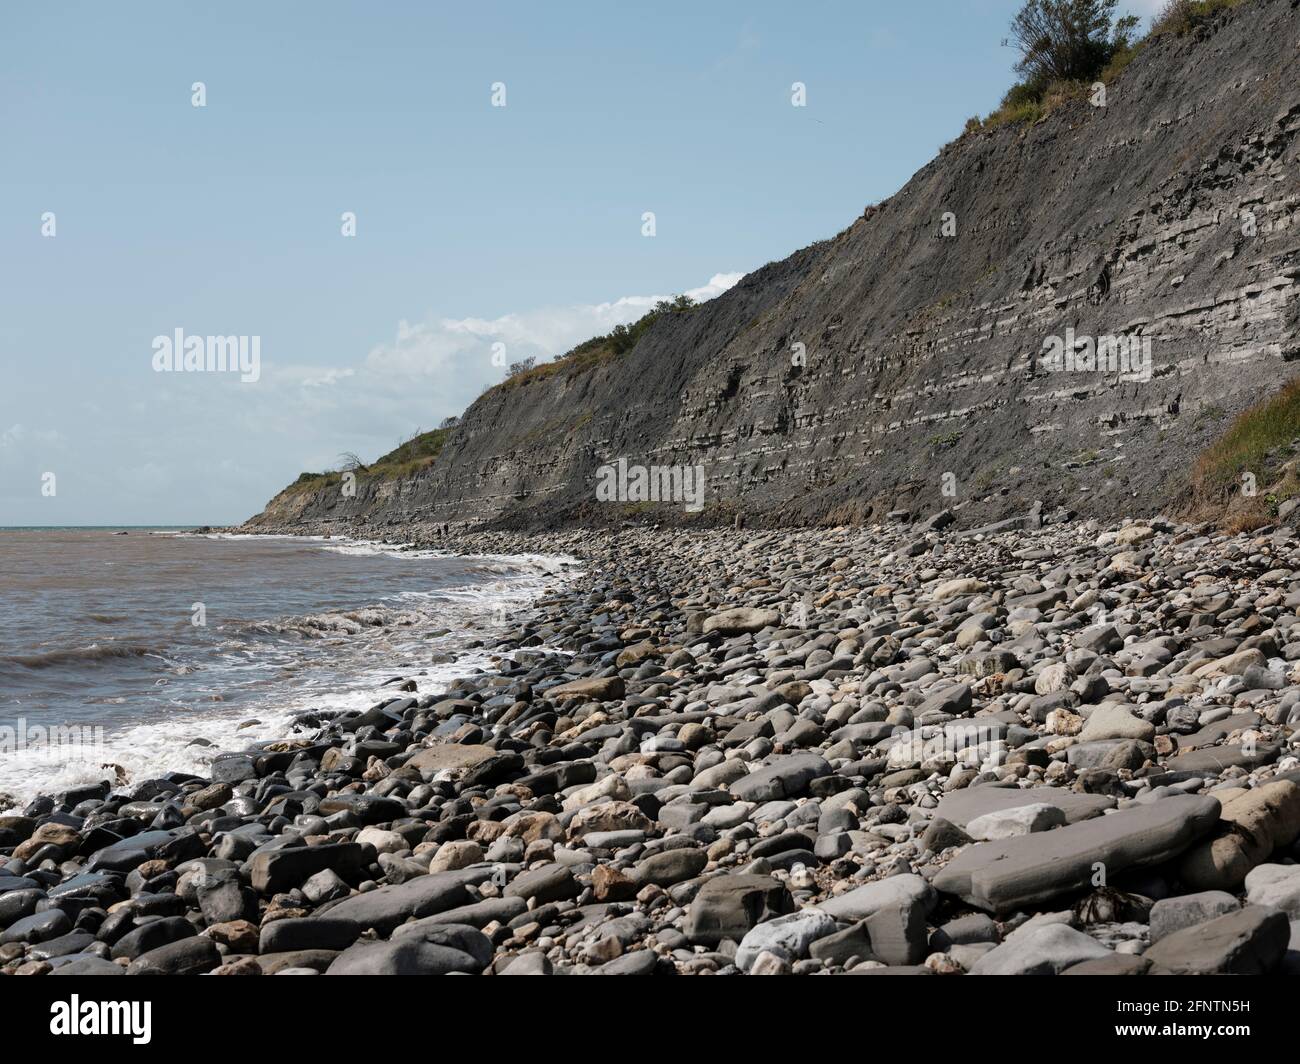 Lyme Regis Fossil Beach, famoso por su abundancia de fósiles marinos, Lyme Regis, Dorset, Reino Unido, 2019. Foto de stock